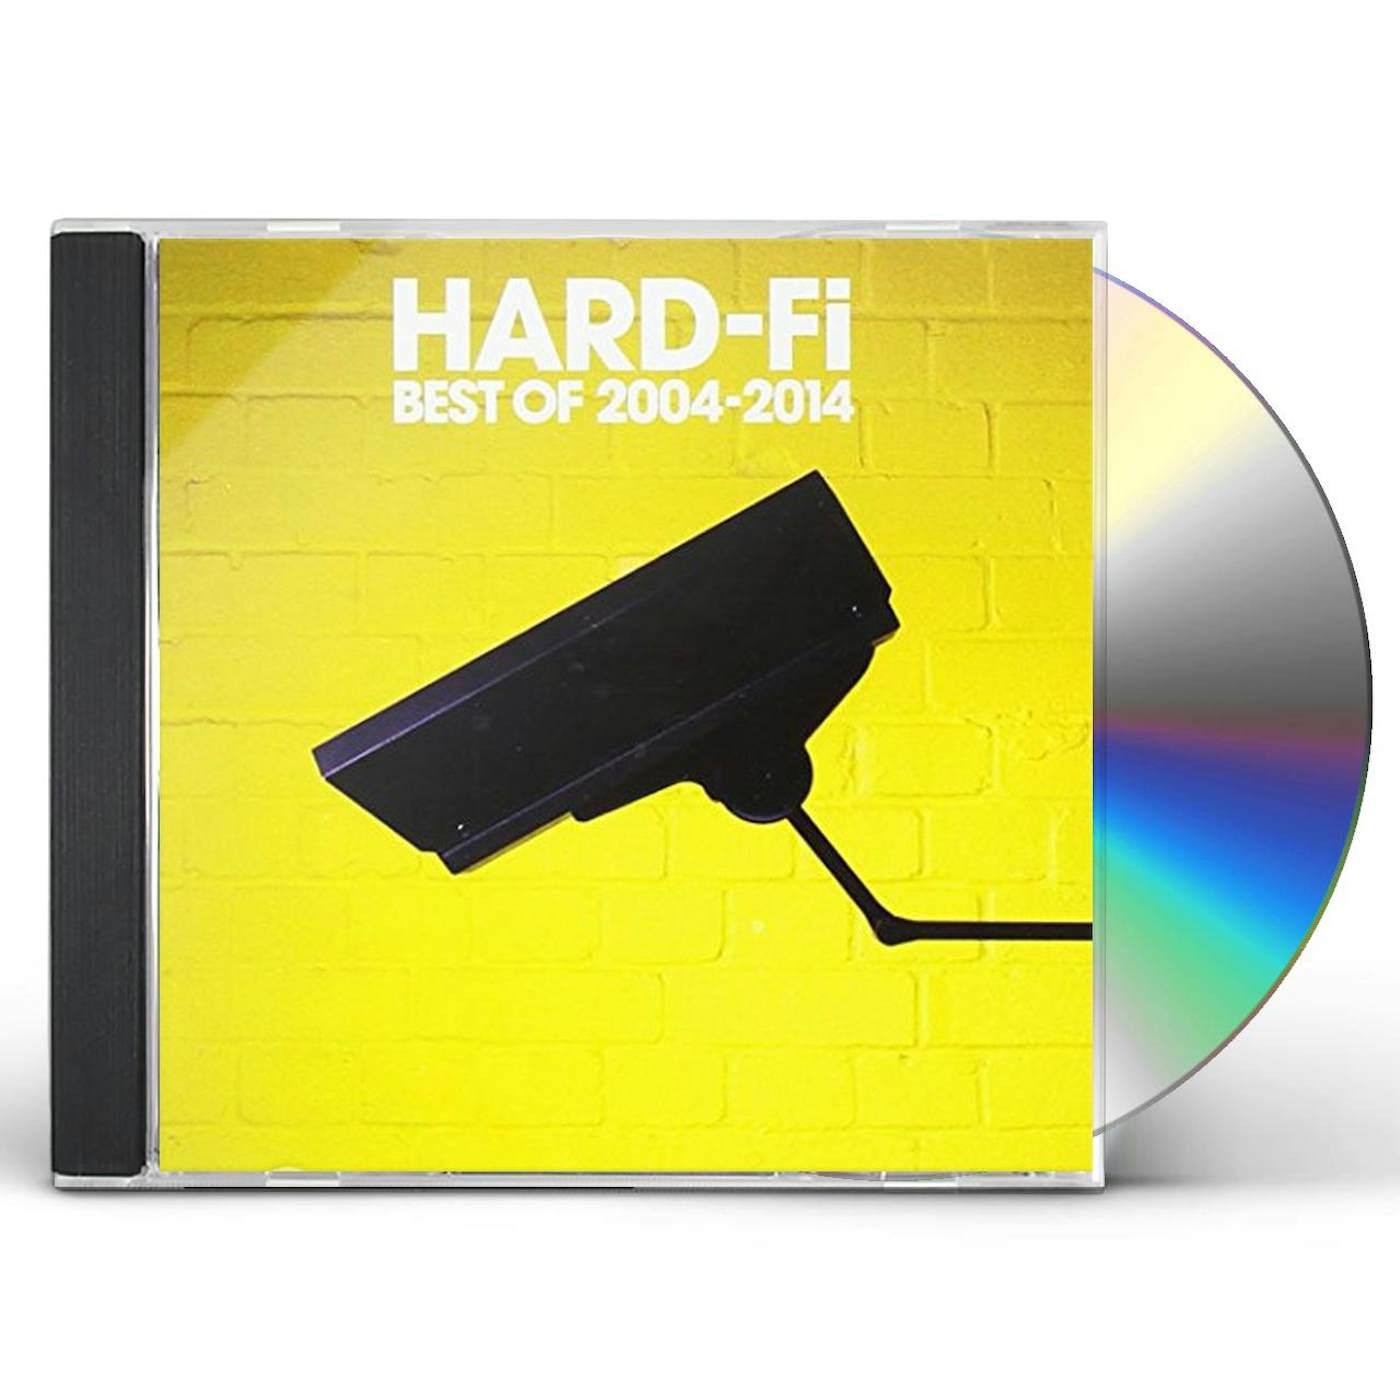 Hard-FI BEST OF 2004-2014 CD